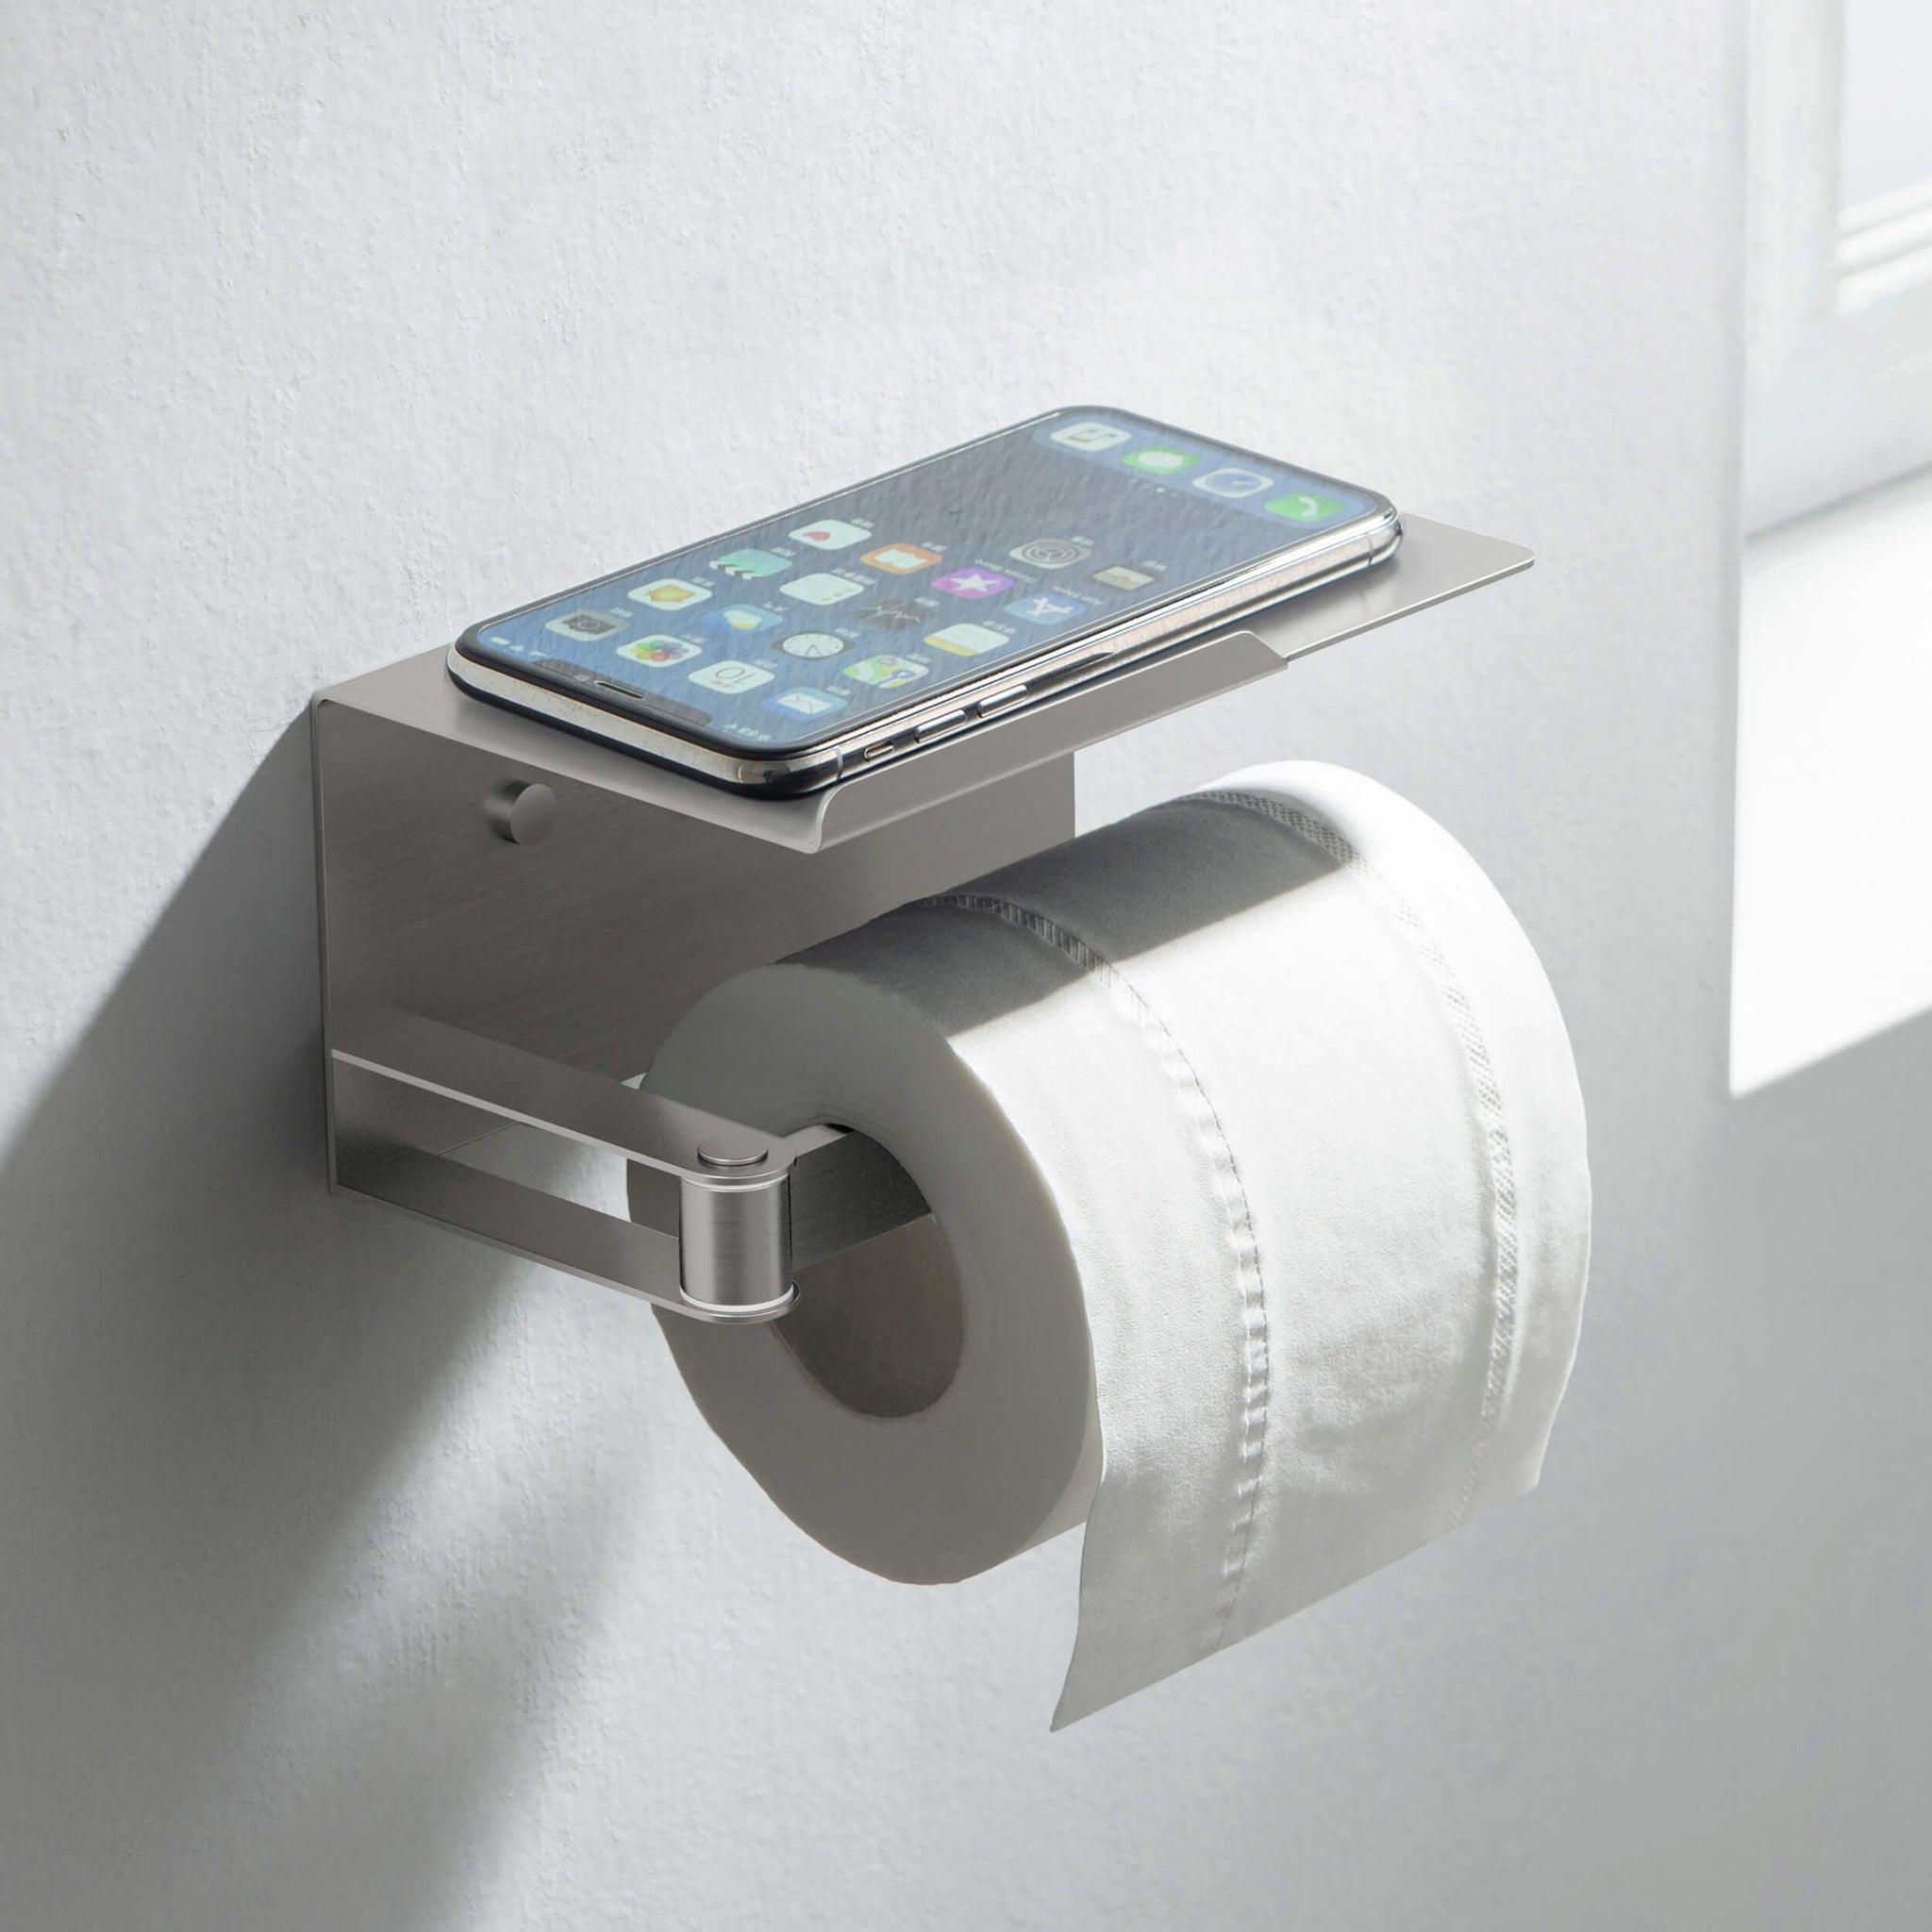 KIBI, KIBI Deco Bathroom Toilet Paper Holder With Platform in Brushed Nickel Finish